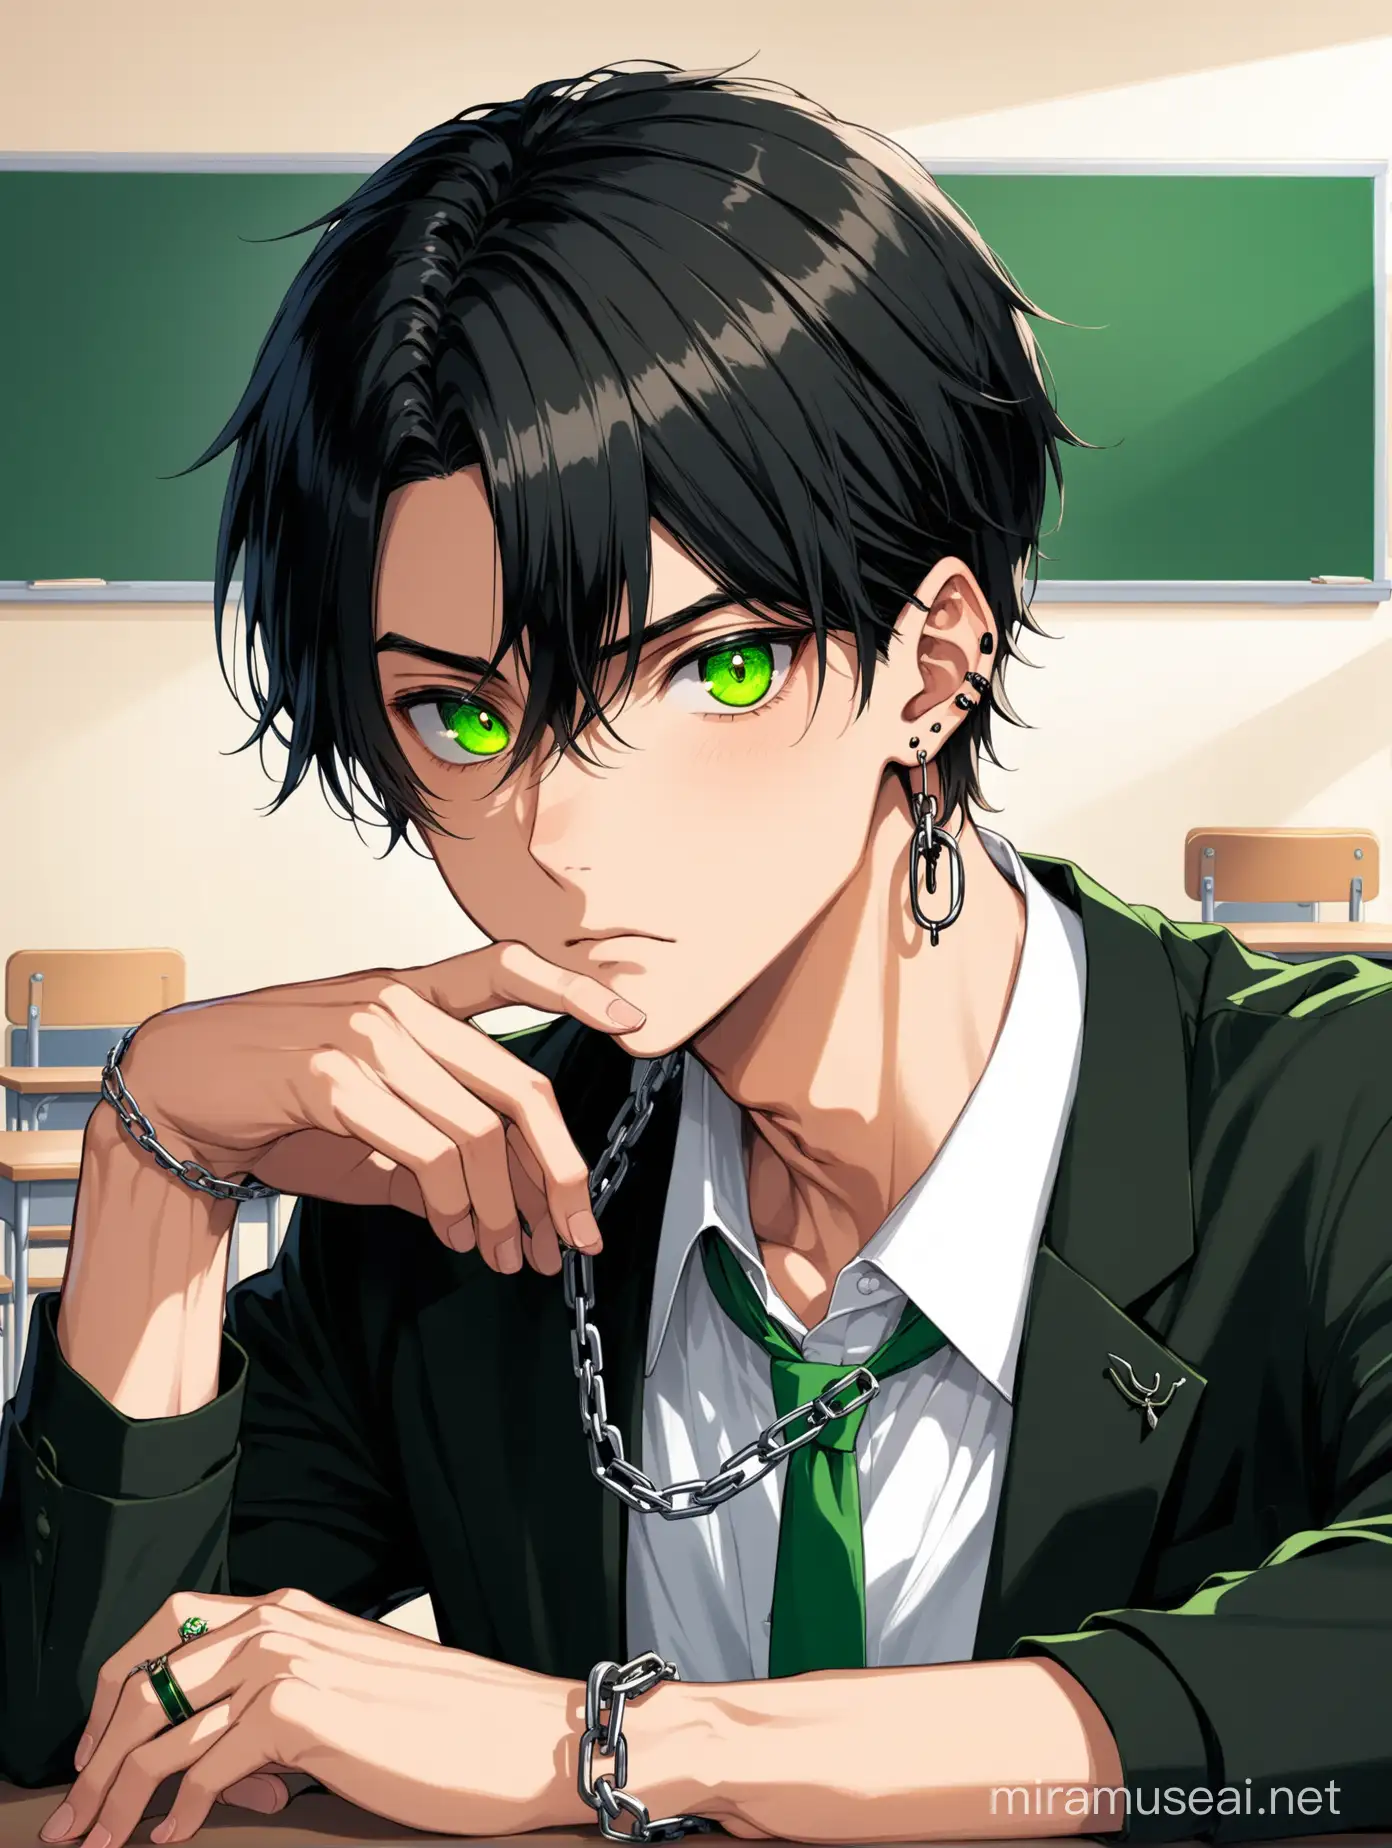 Mysterious Teenage Boy in Green School Uniform Sitting in Classroom